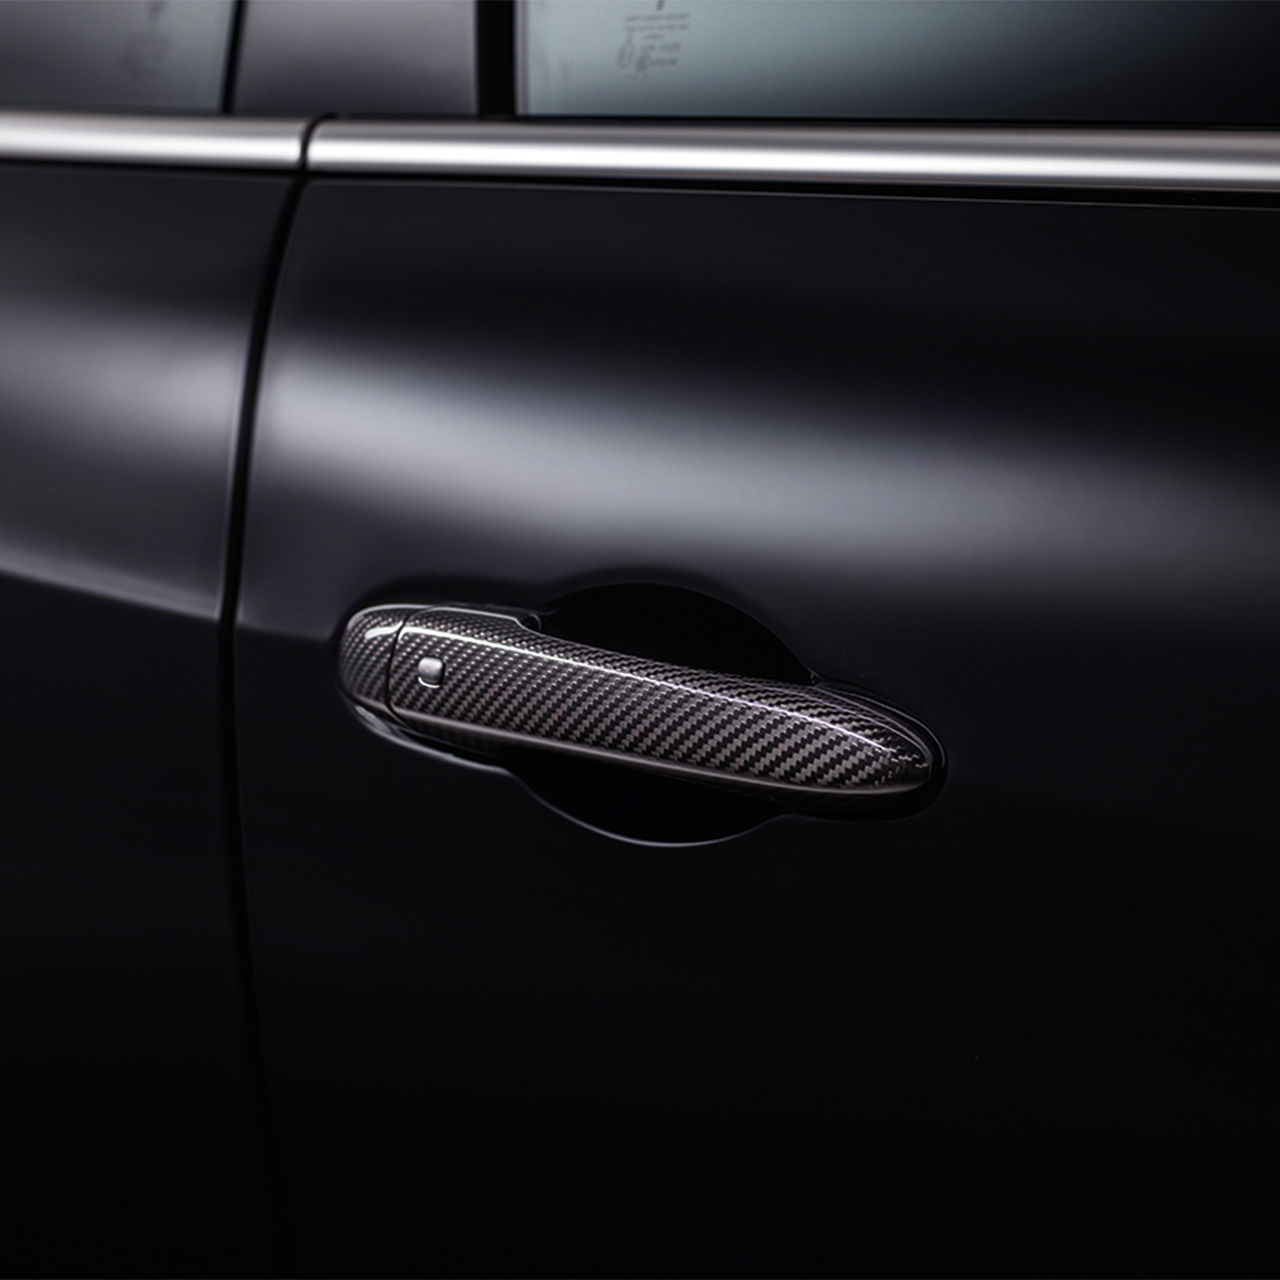 Maneta de la puerta de carbono en Maserati Quattroporte